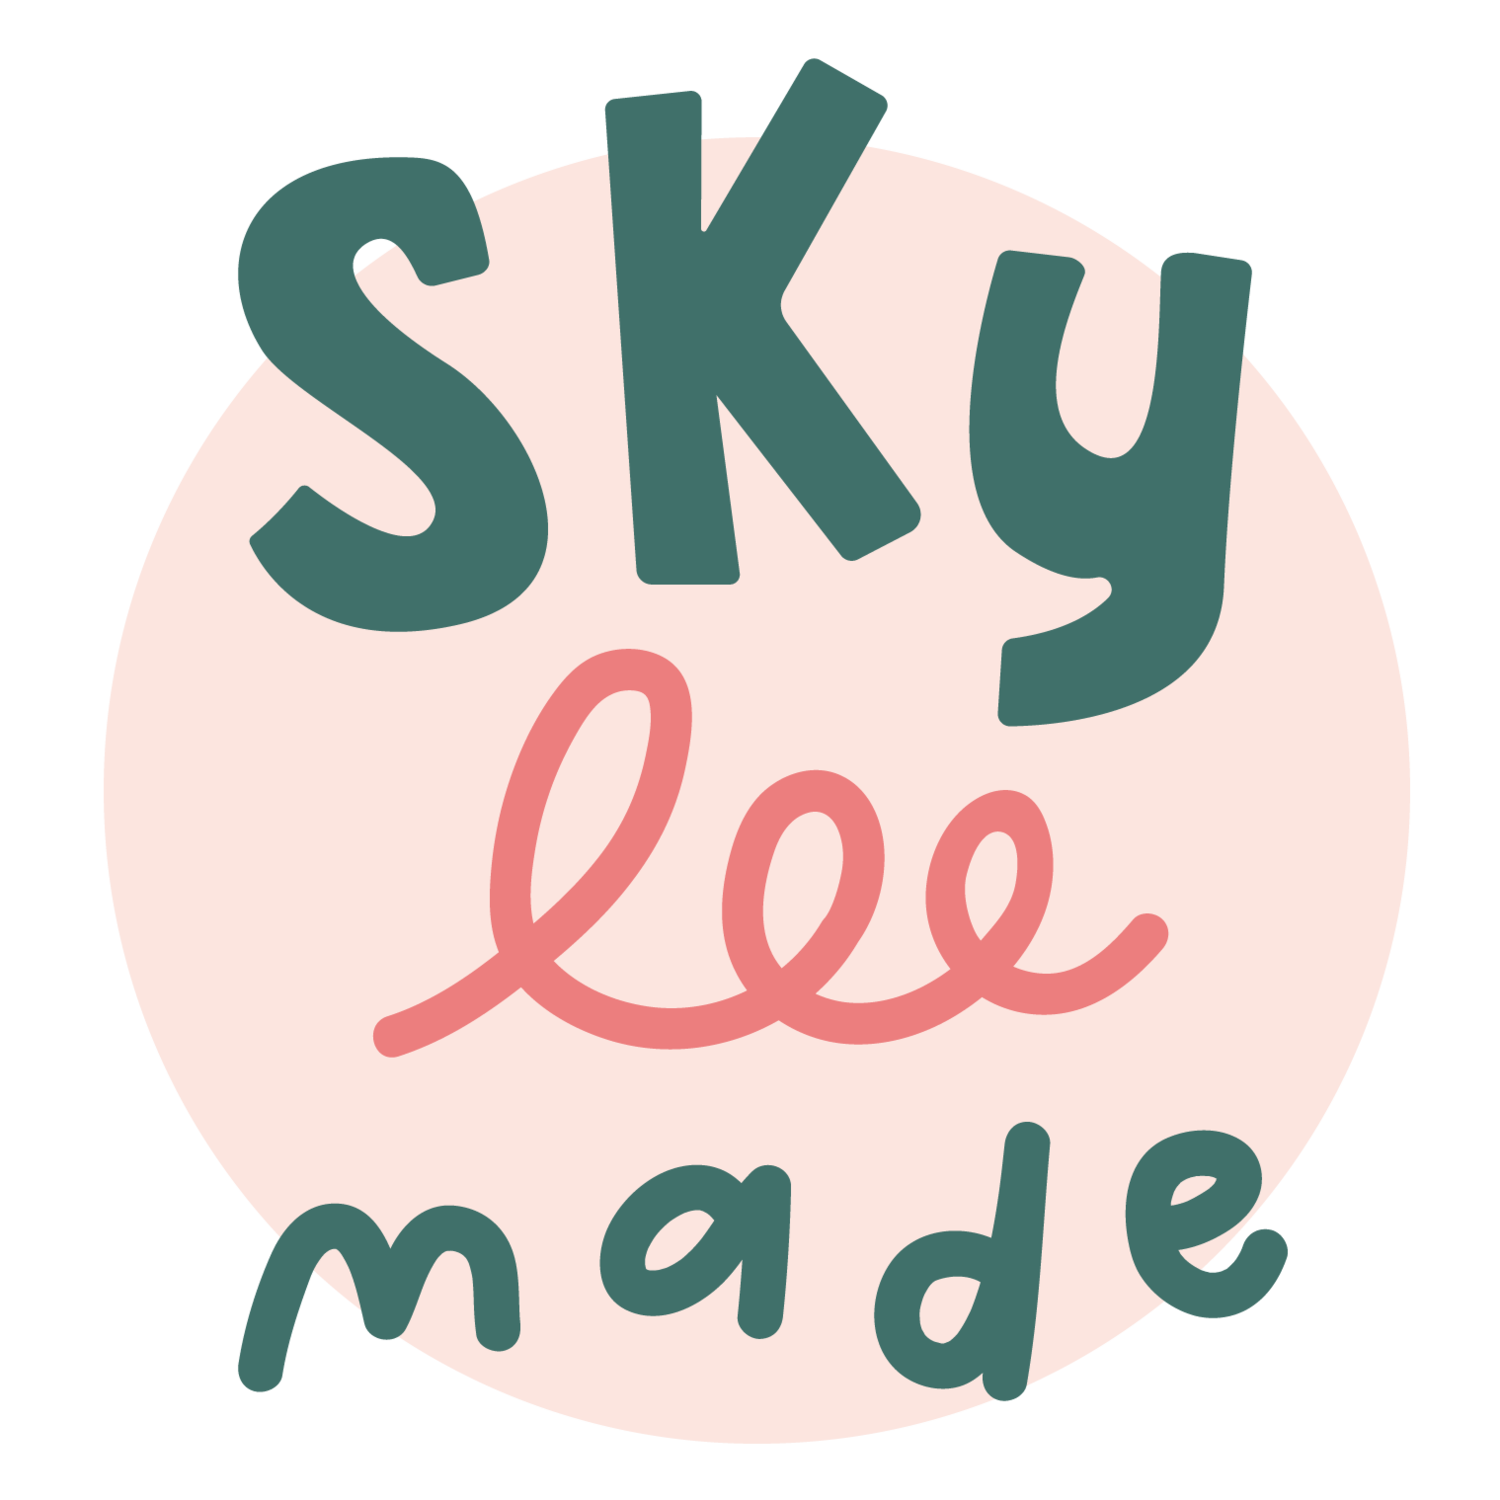 Sky Lee Made